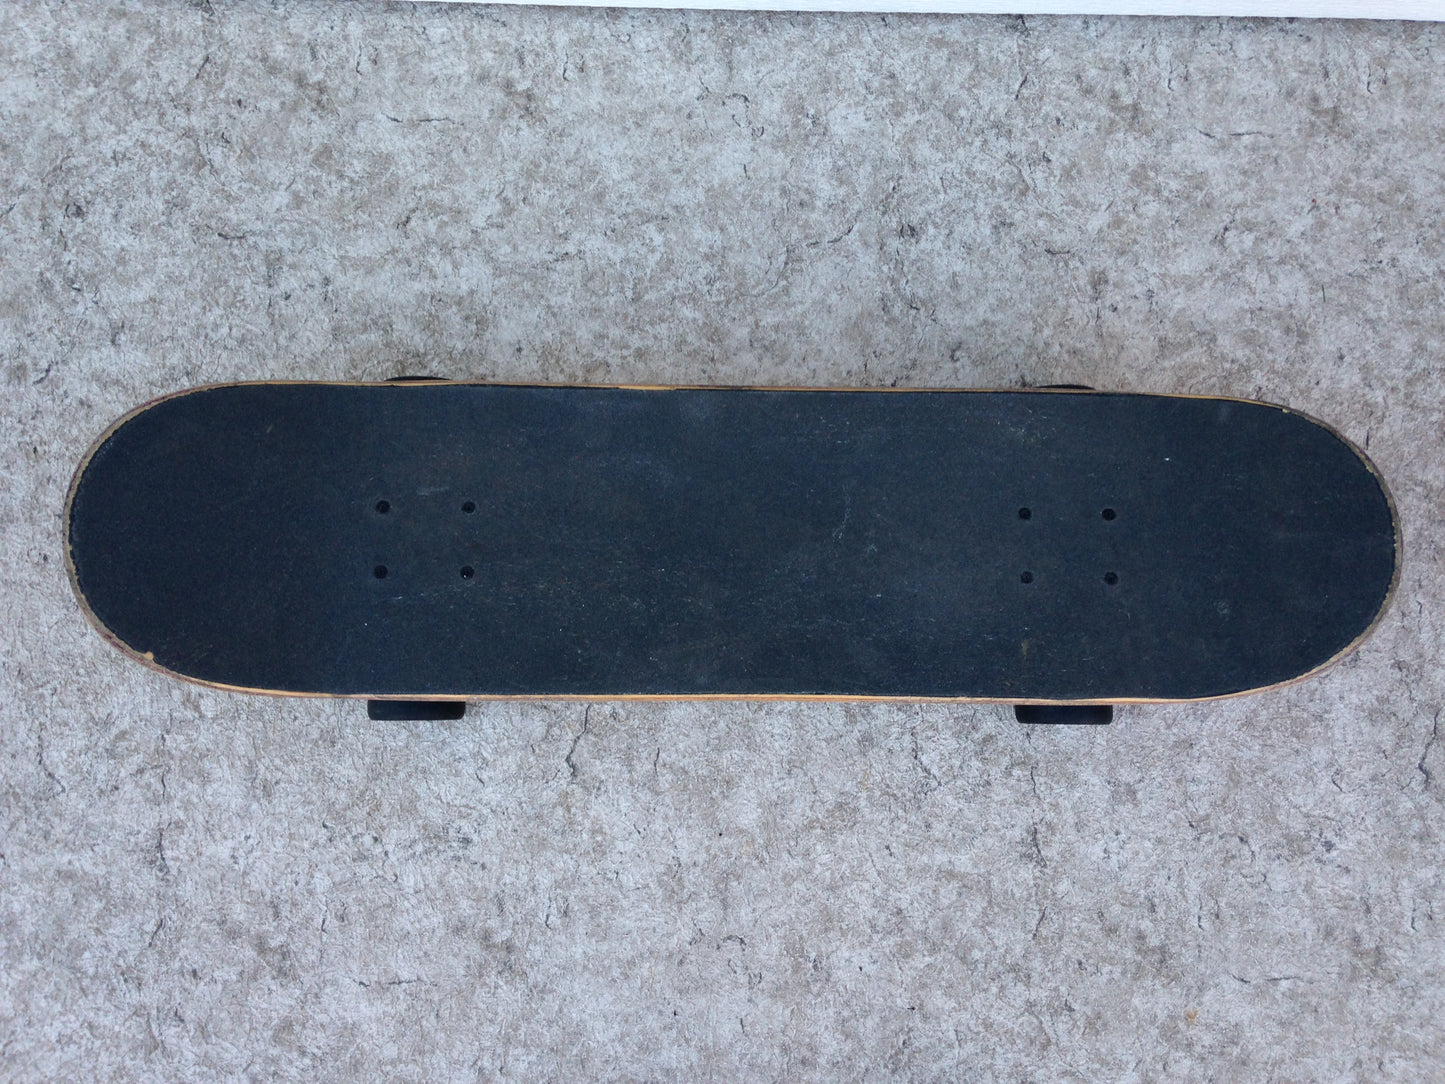 Skateboard Change Standard Size 30 inch Excellent